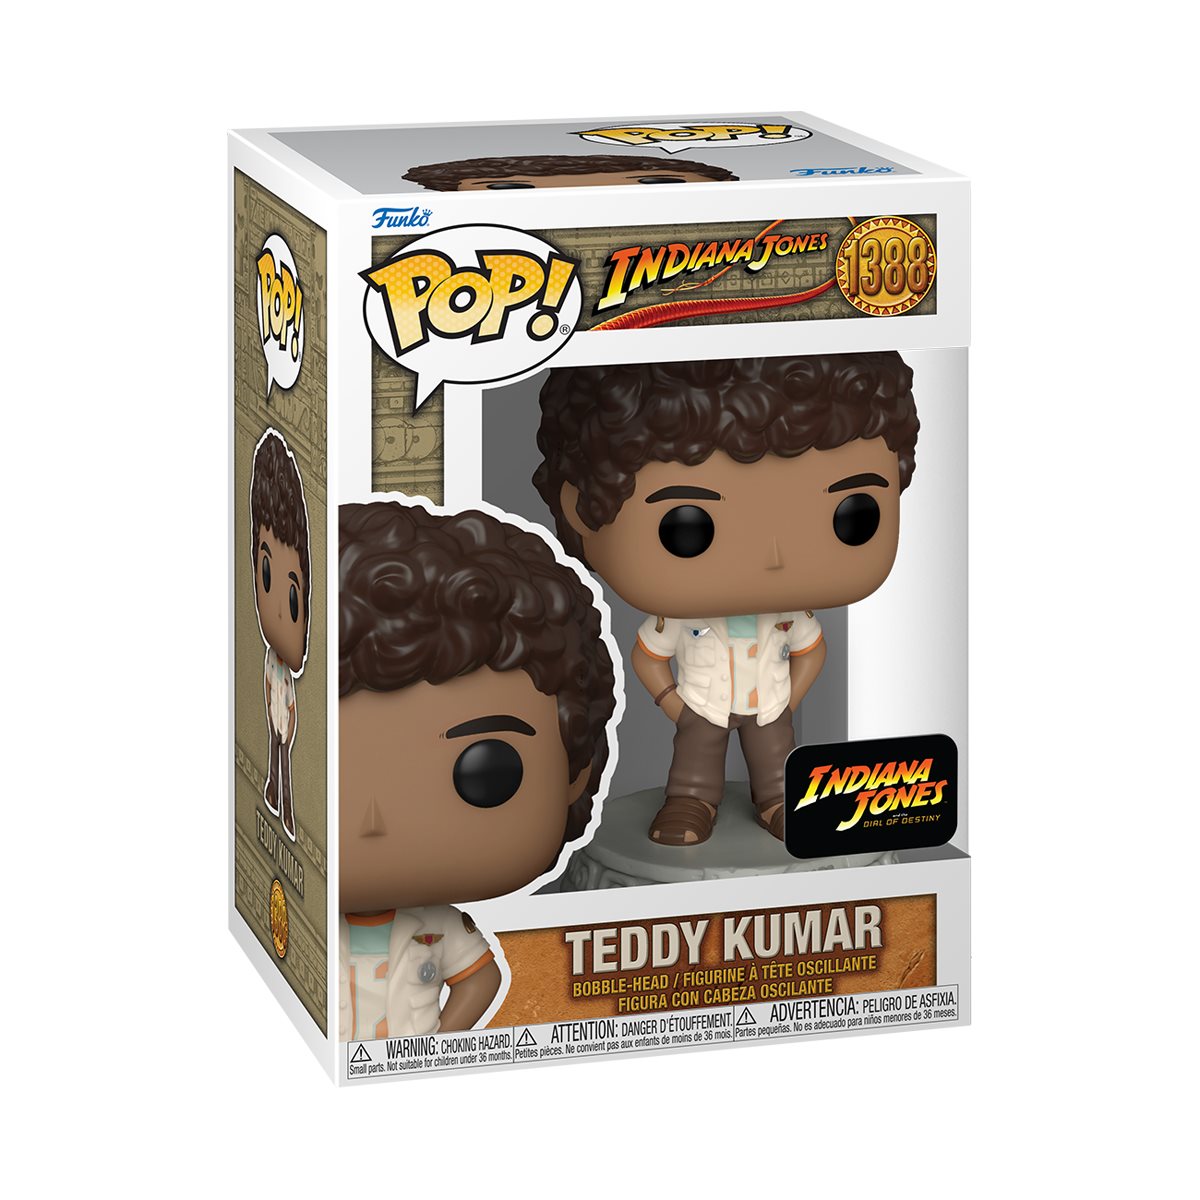 Indiana Jones and the Dial of Destiny Teddy Kumar #1388 Funko Pop! Vinyl Figure